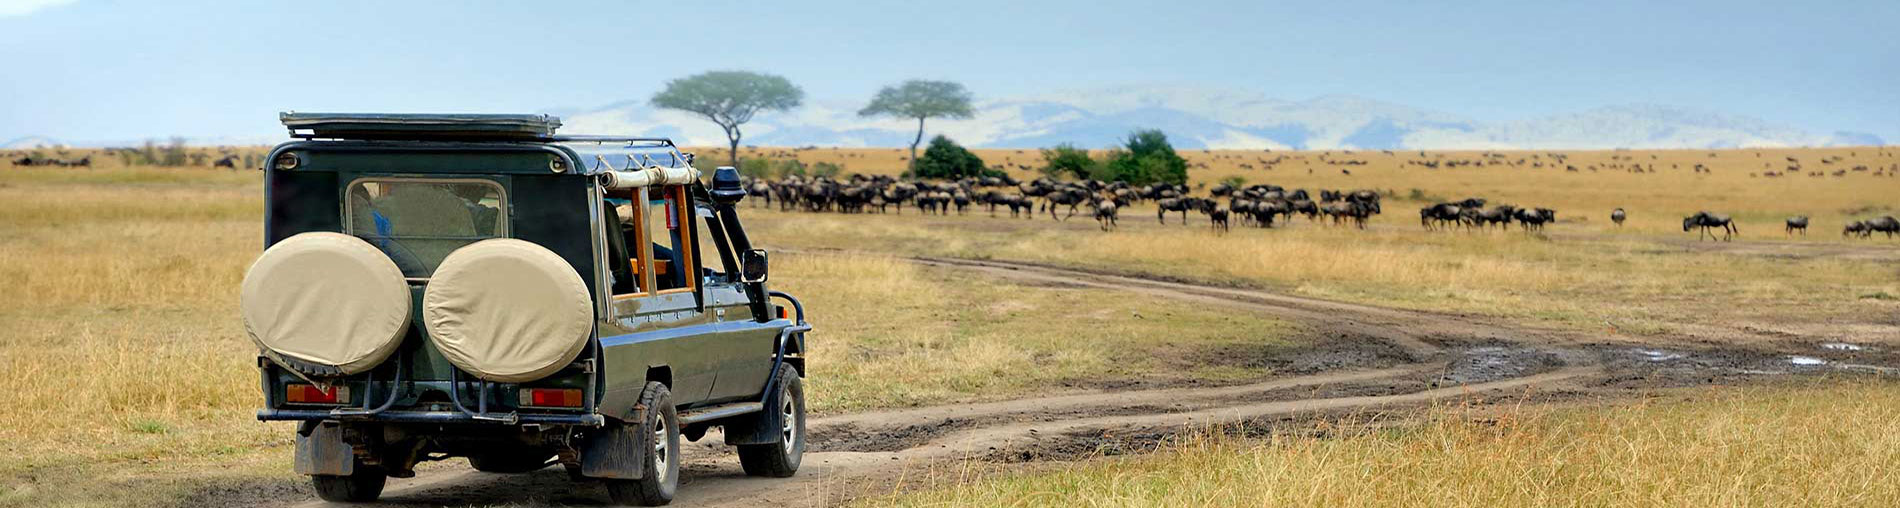 Kenya Safari Tour Package from India